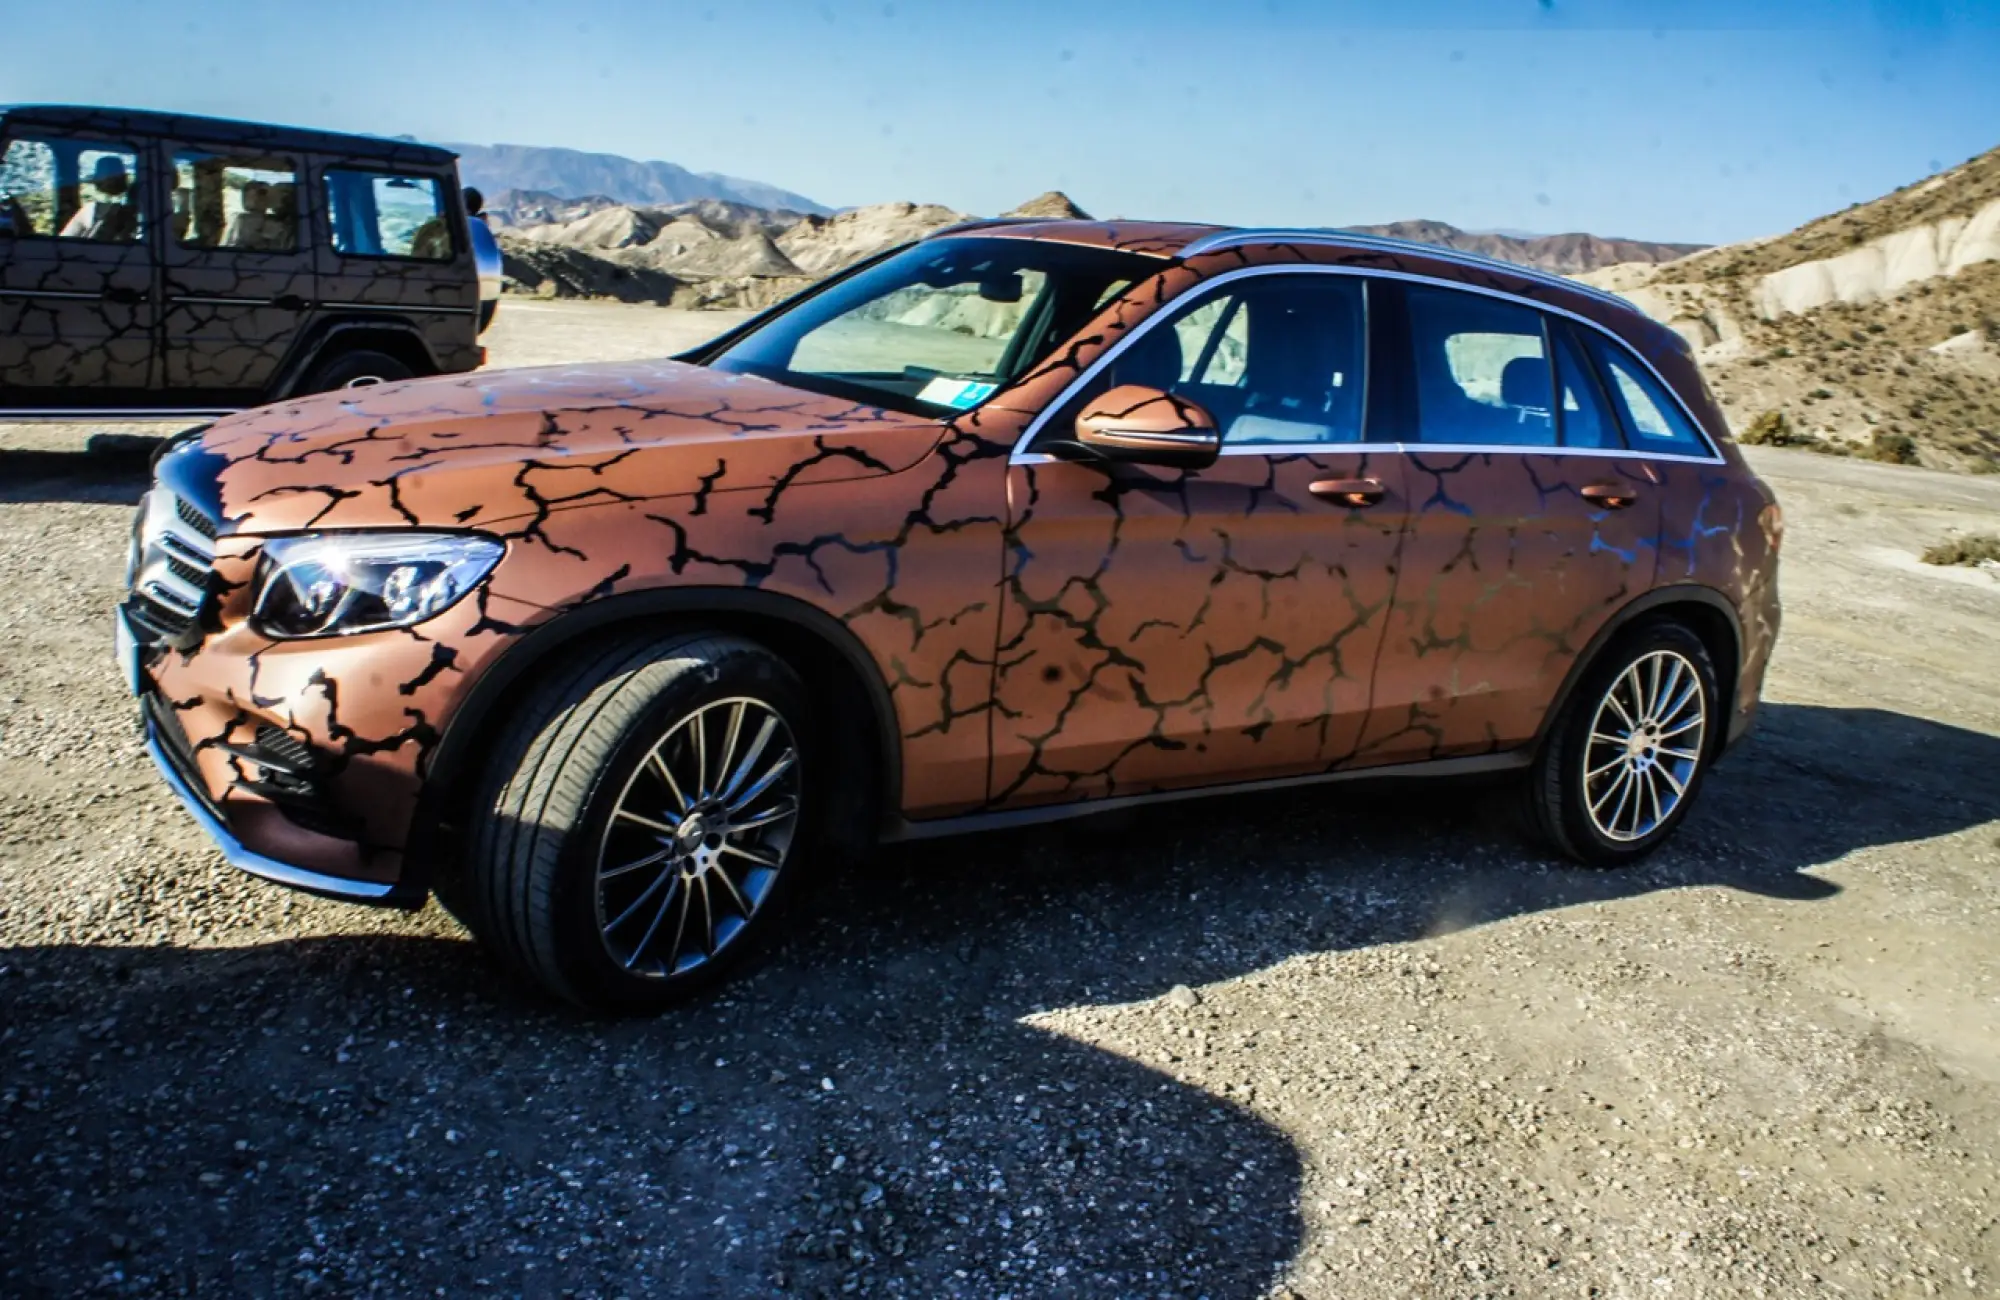 Mercedes SUV Attack Desert Test Drive - 76